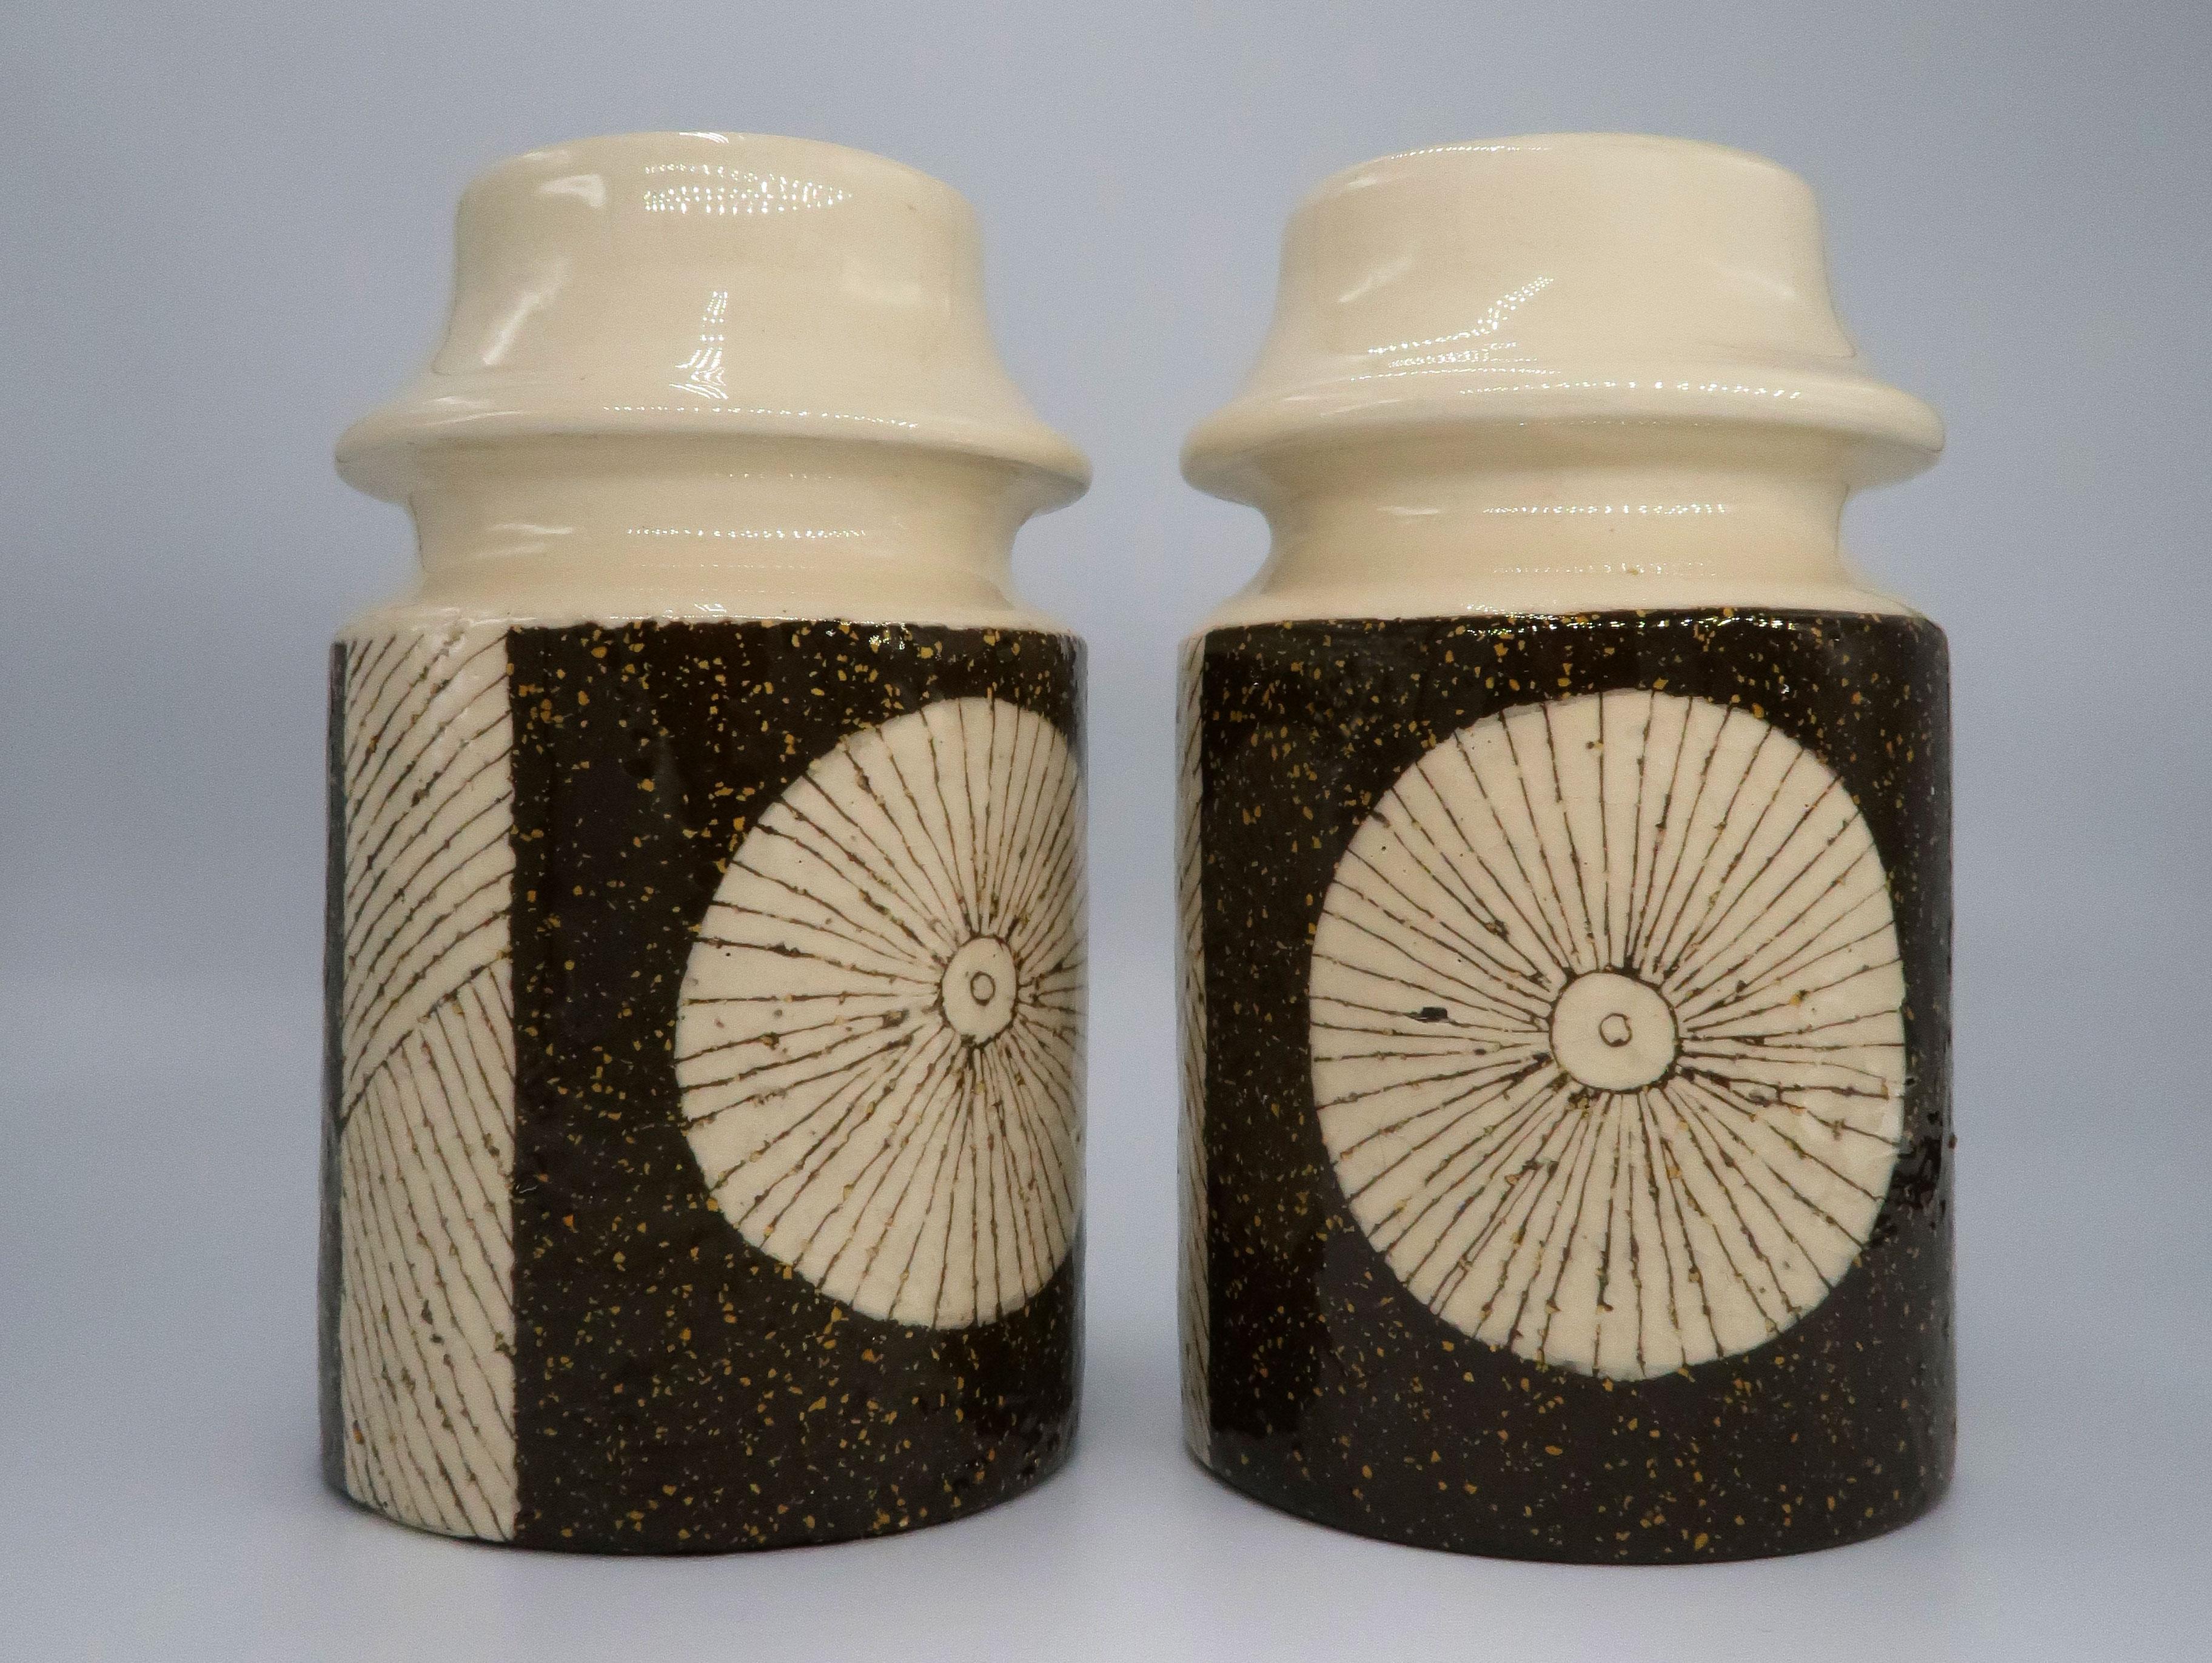 Rare pair of Swedish Mid-Century Modern handmade and hand decorated ceramic vases with semi-crackle glaze. By acclaimed Estonian-Swedish designer Mari Simmulson (1911-2000) who designed for Upsala Ekeby from 1949-1972. Model 1102M. Chamotte clay